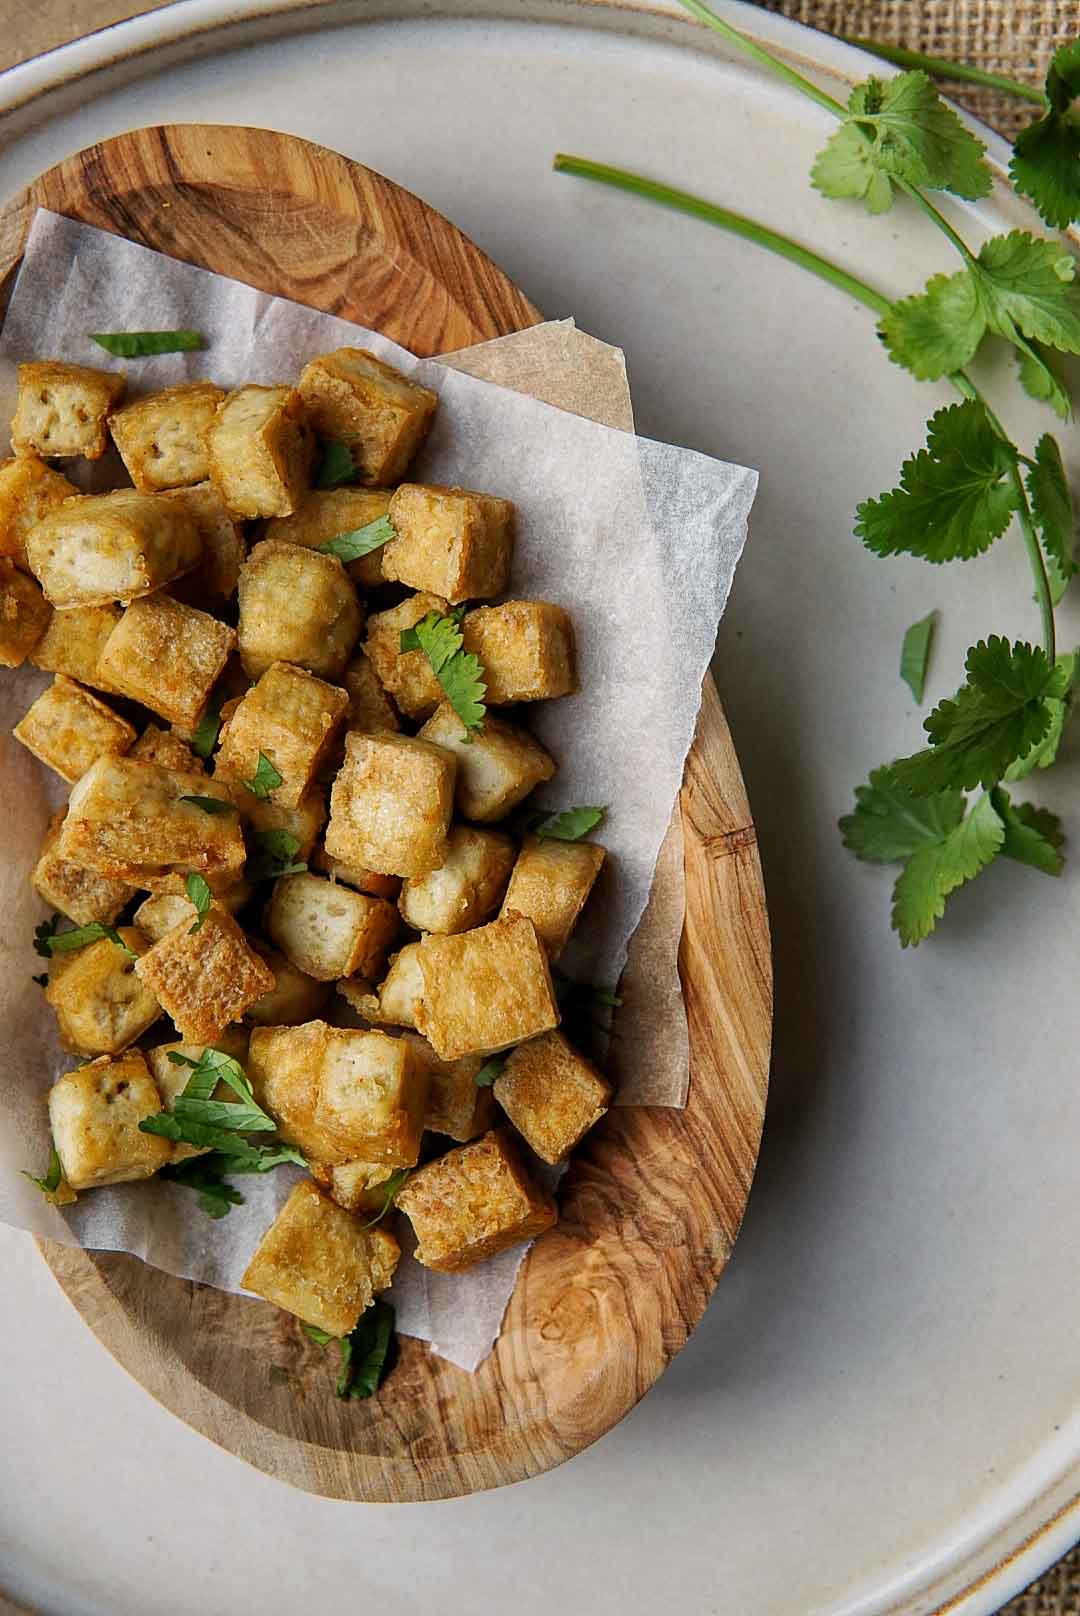 Recept hoe maak je knapperige tofu?